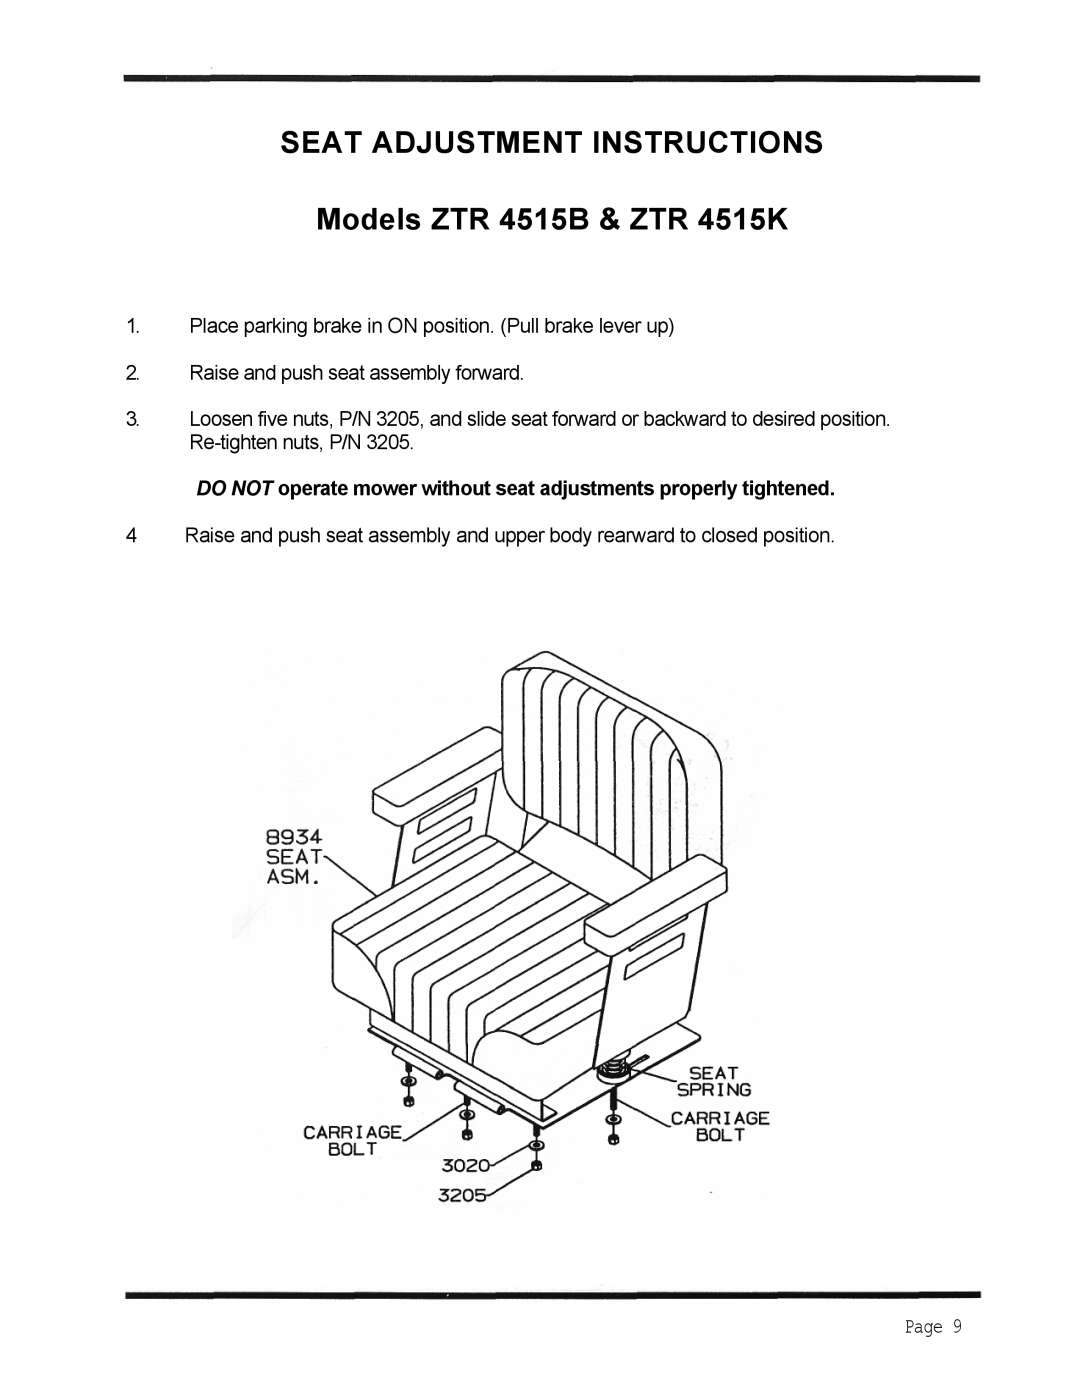 Dixon 1998 manual SEAT ADJUSTMENT INSTRUCTIONS Models ZTR 4515B & ZTR 4515K, Page 